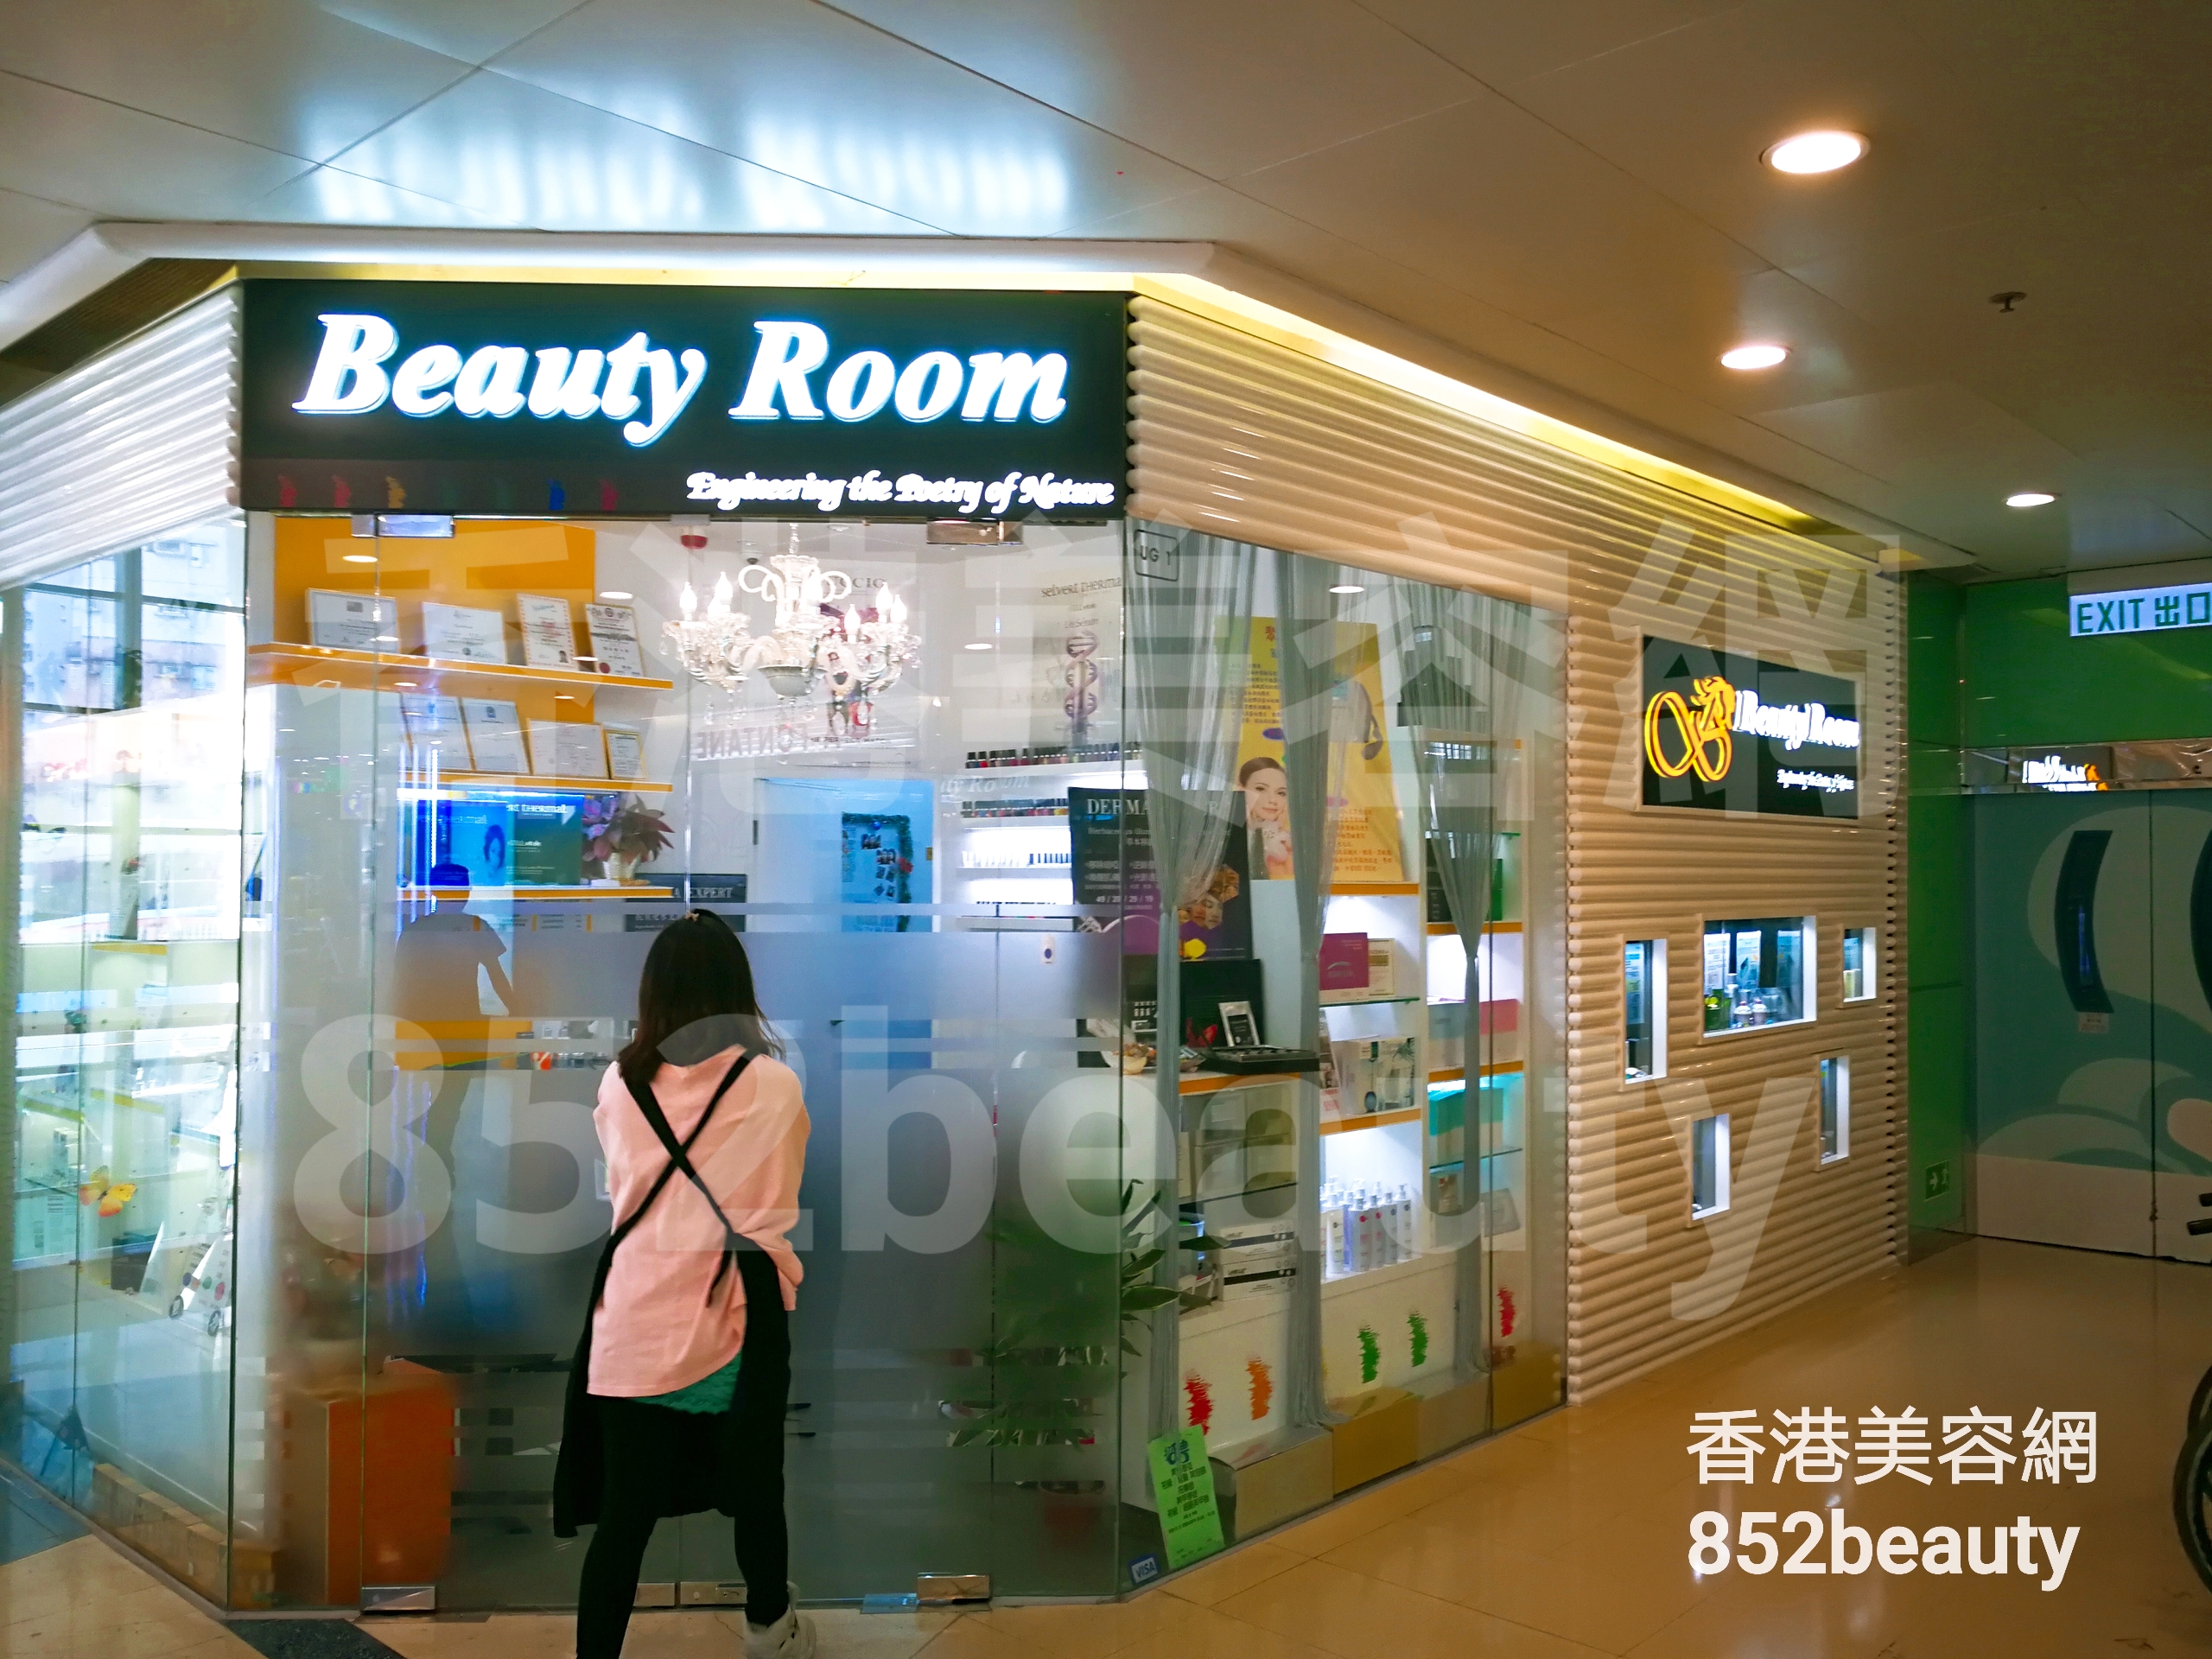 Beauty Salon: Beauty Room